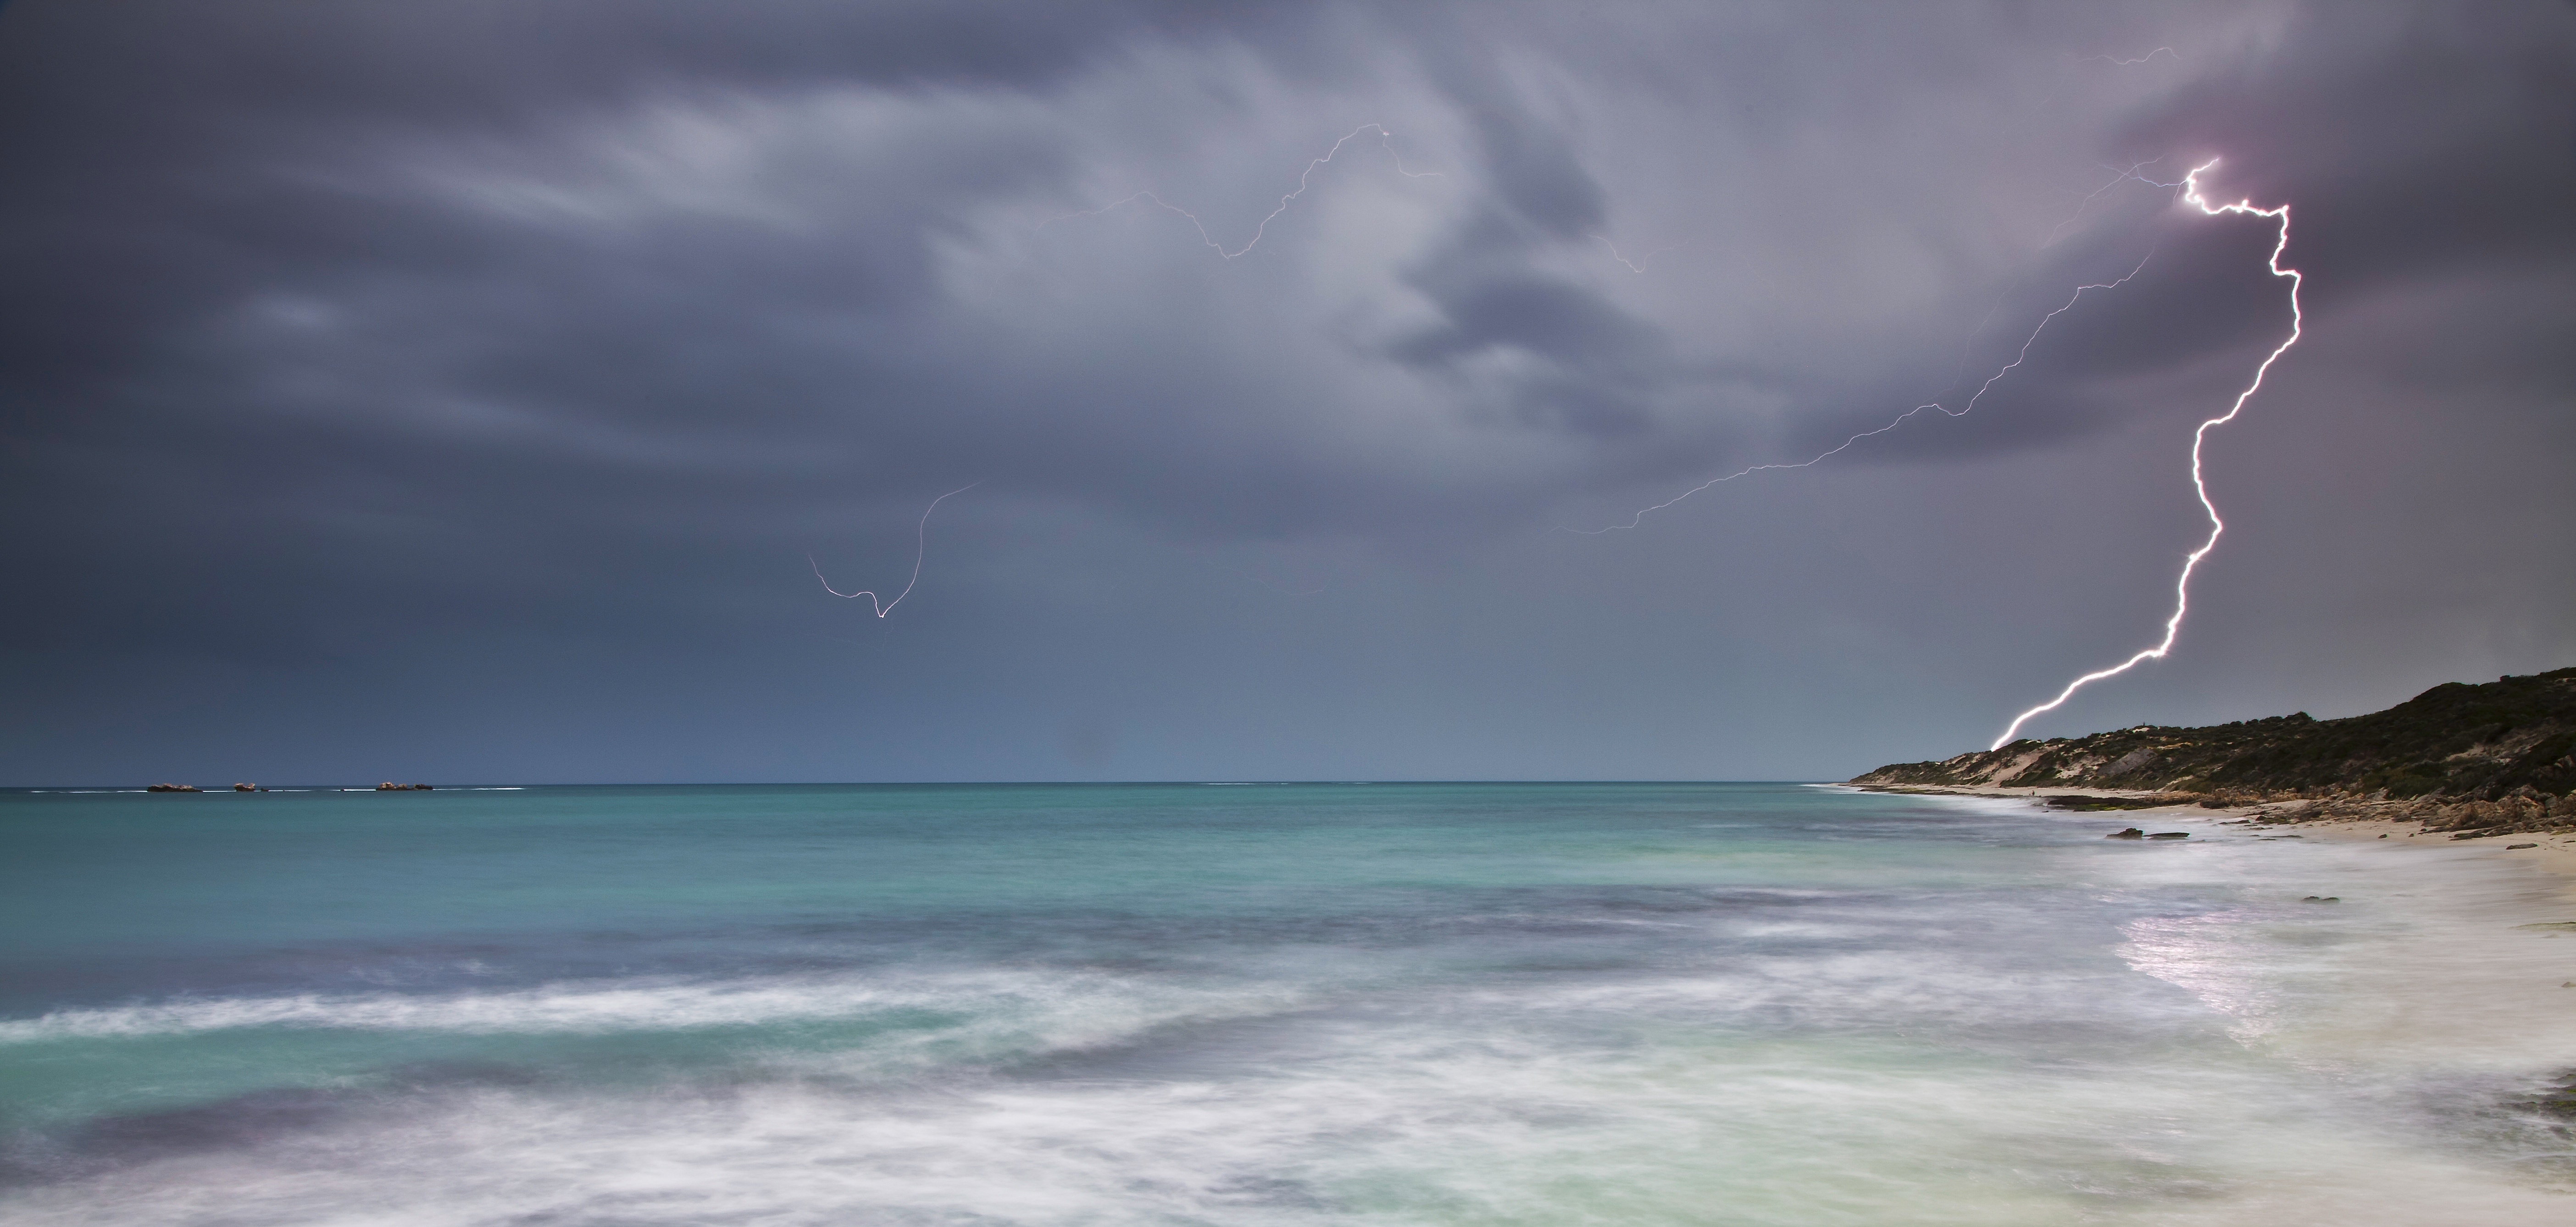 Lightning Over The Ocean 4k Ultra Hd Wallpaper Background Image